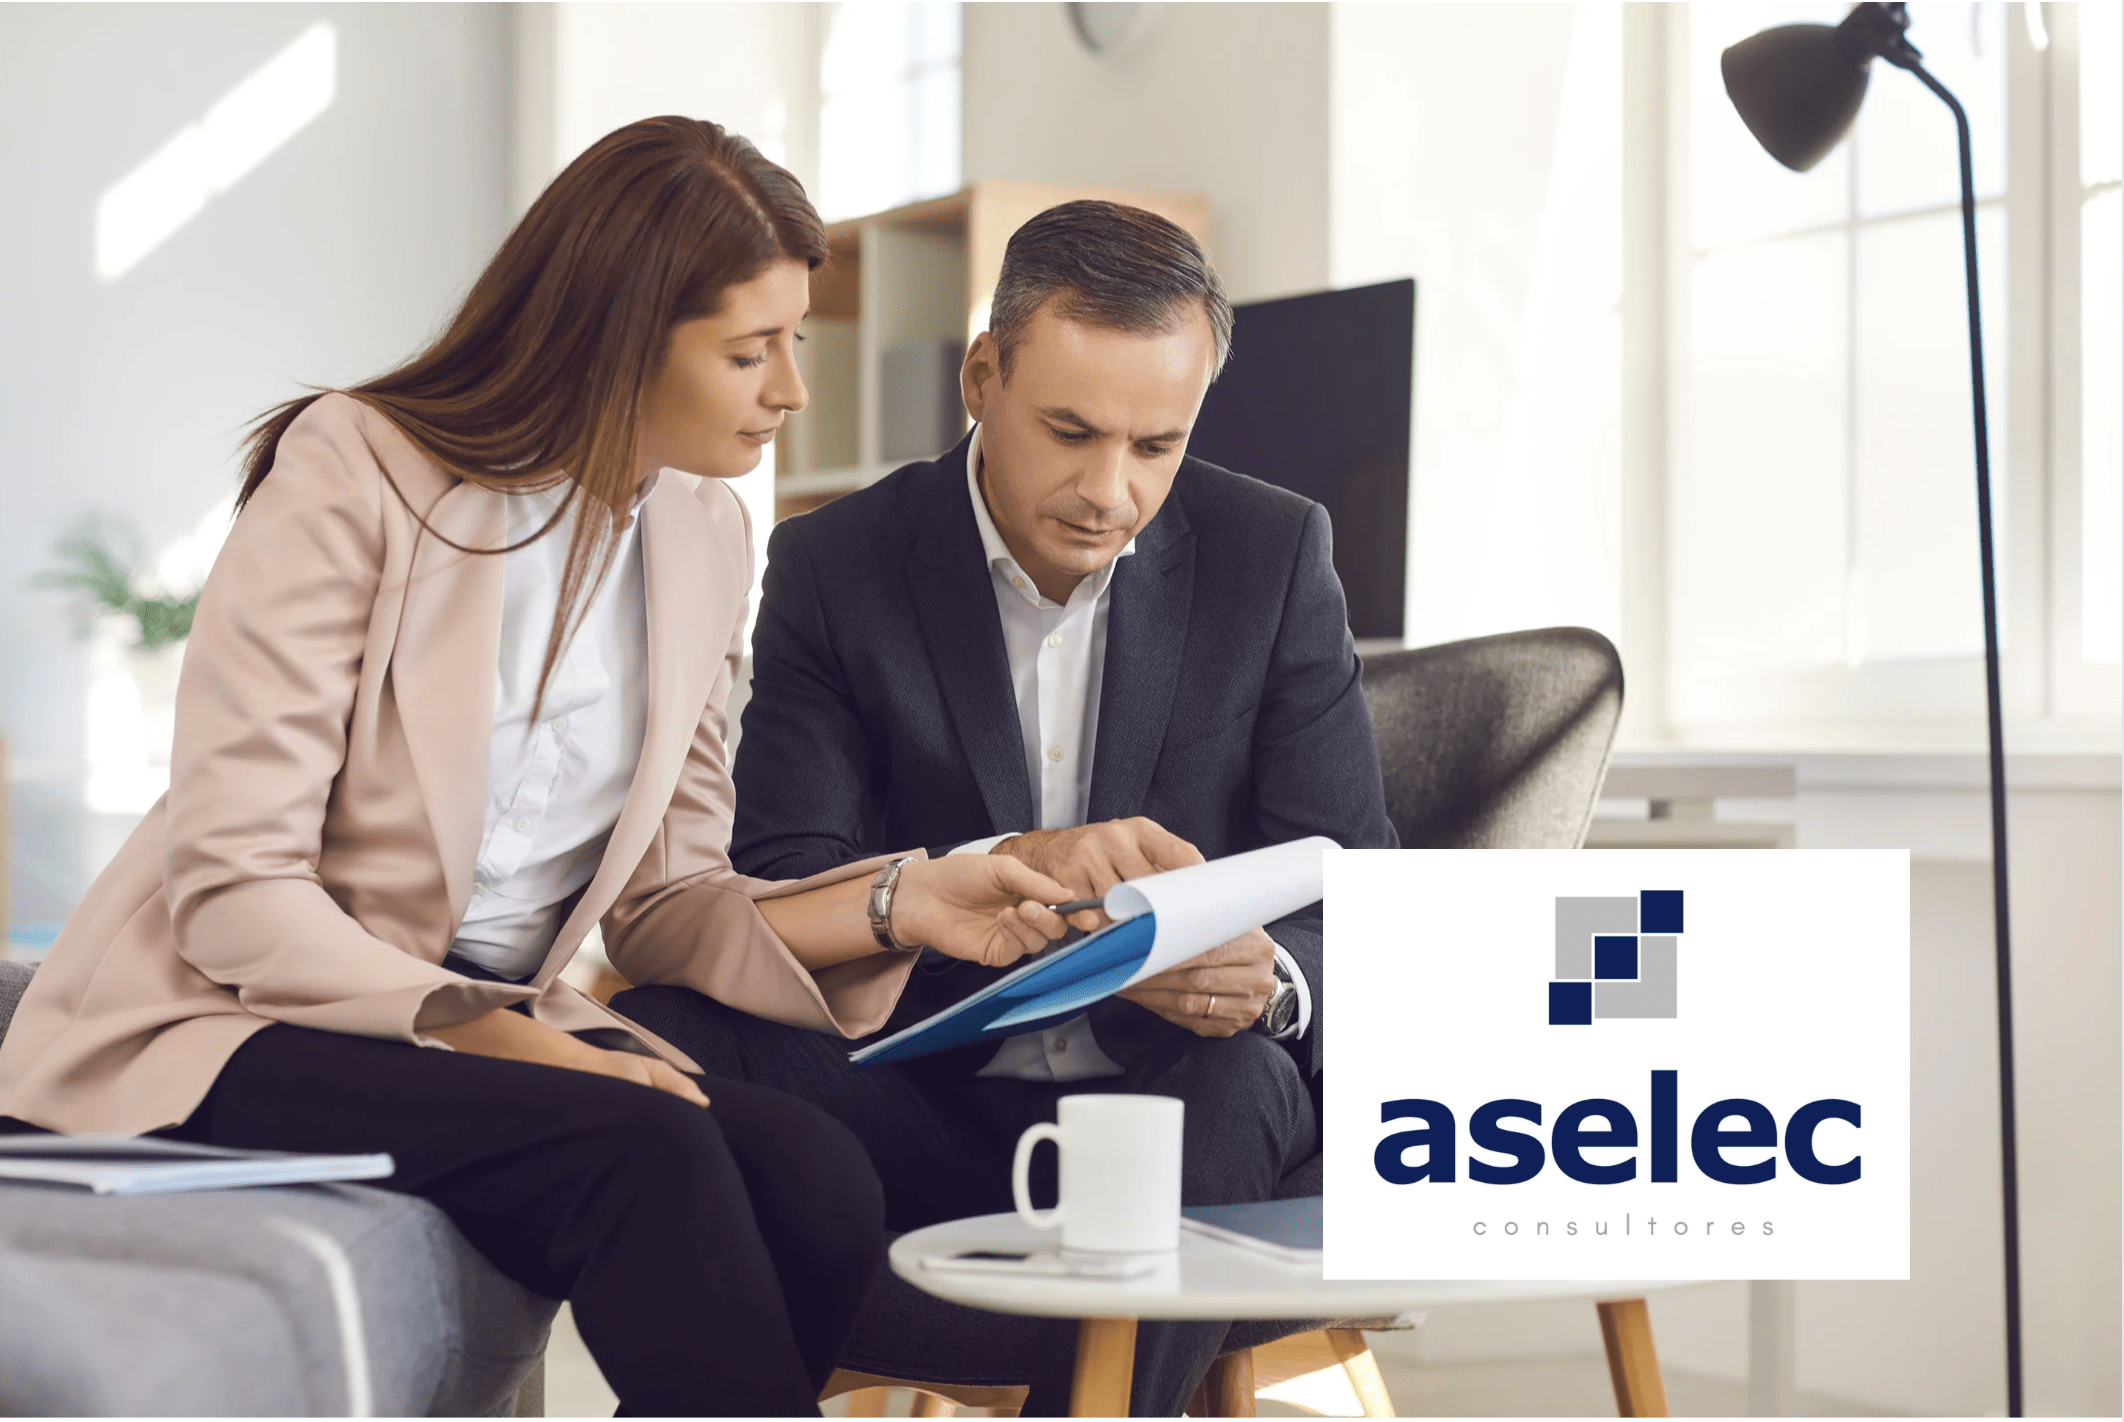 aselec-consultores-asesor